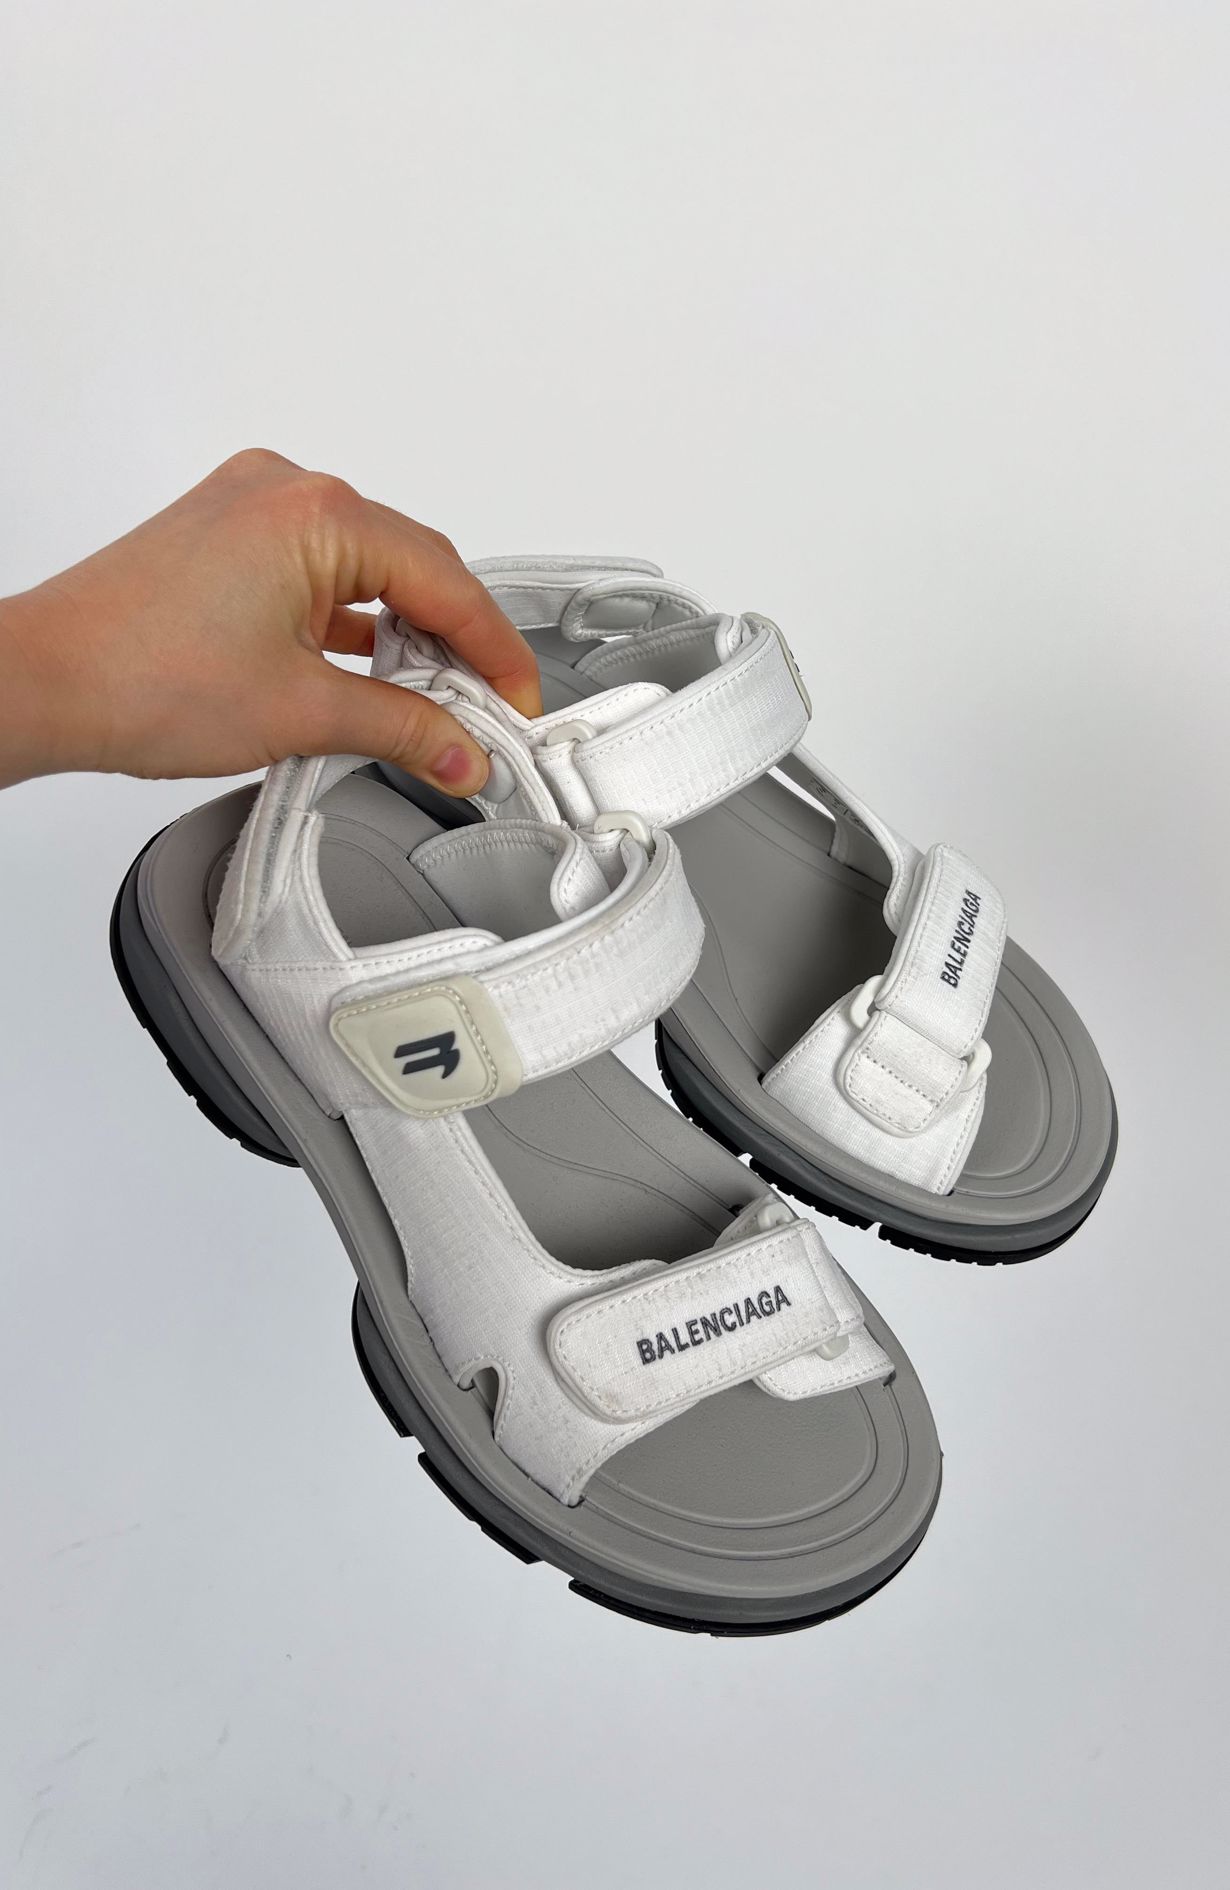 Balenciaga sandals white size 38+ box